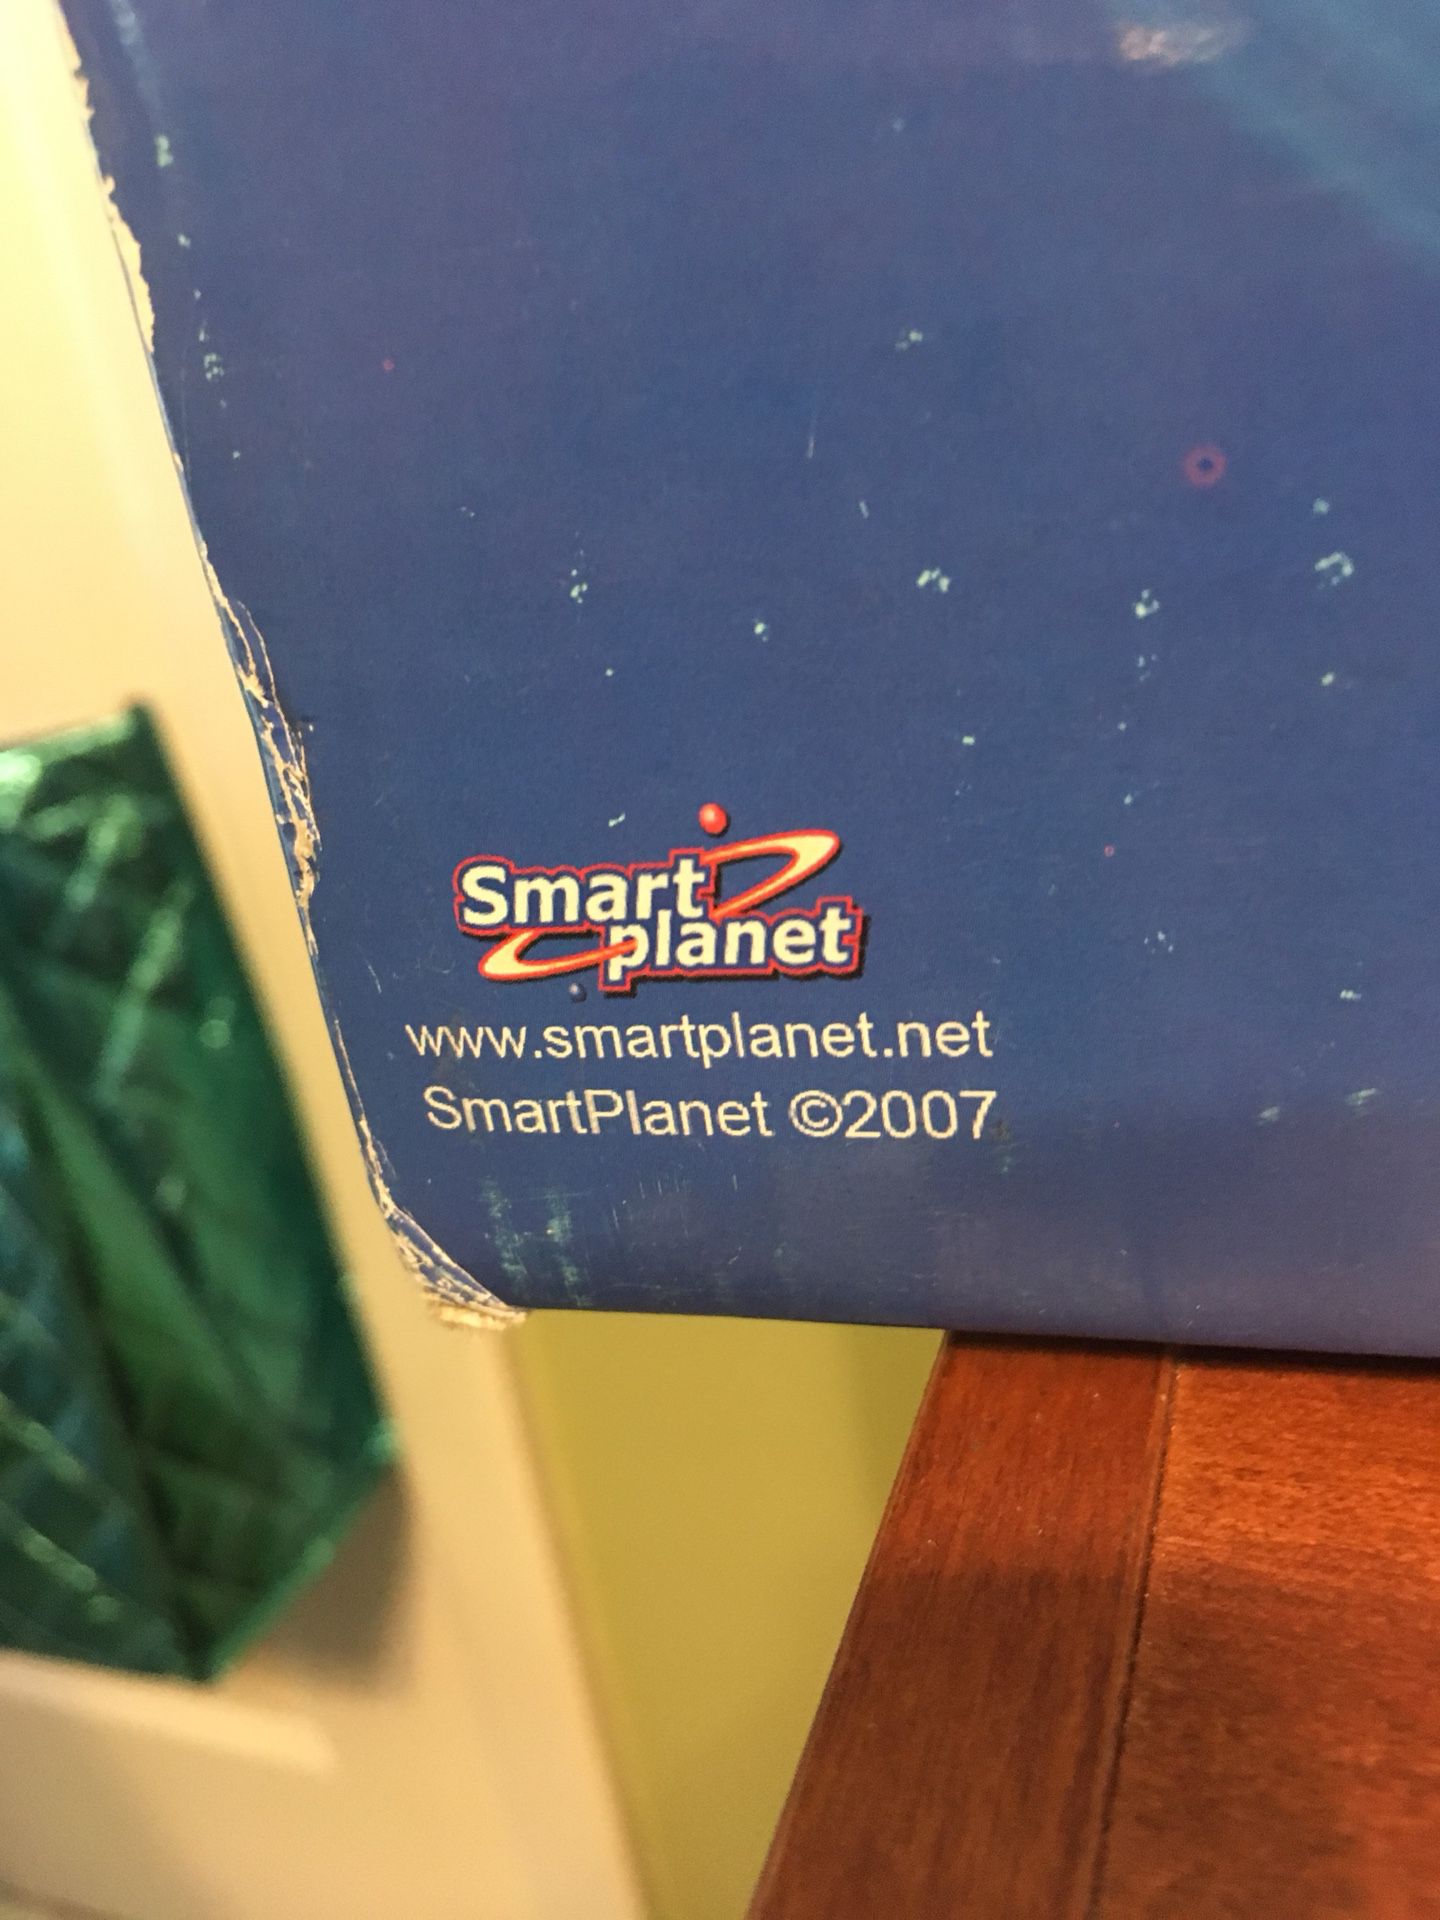 Smart Planet Hot Air Popcorn Maker